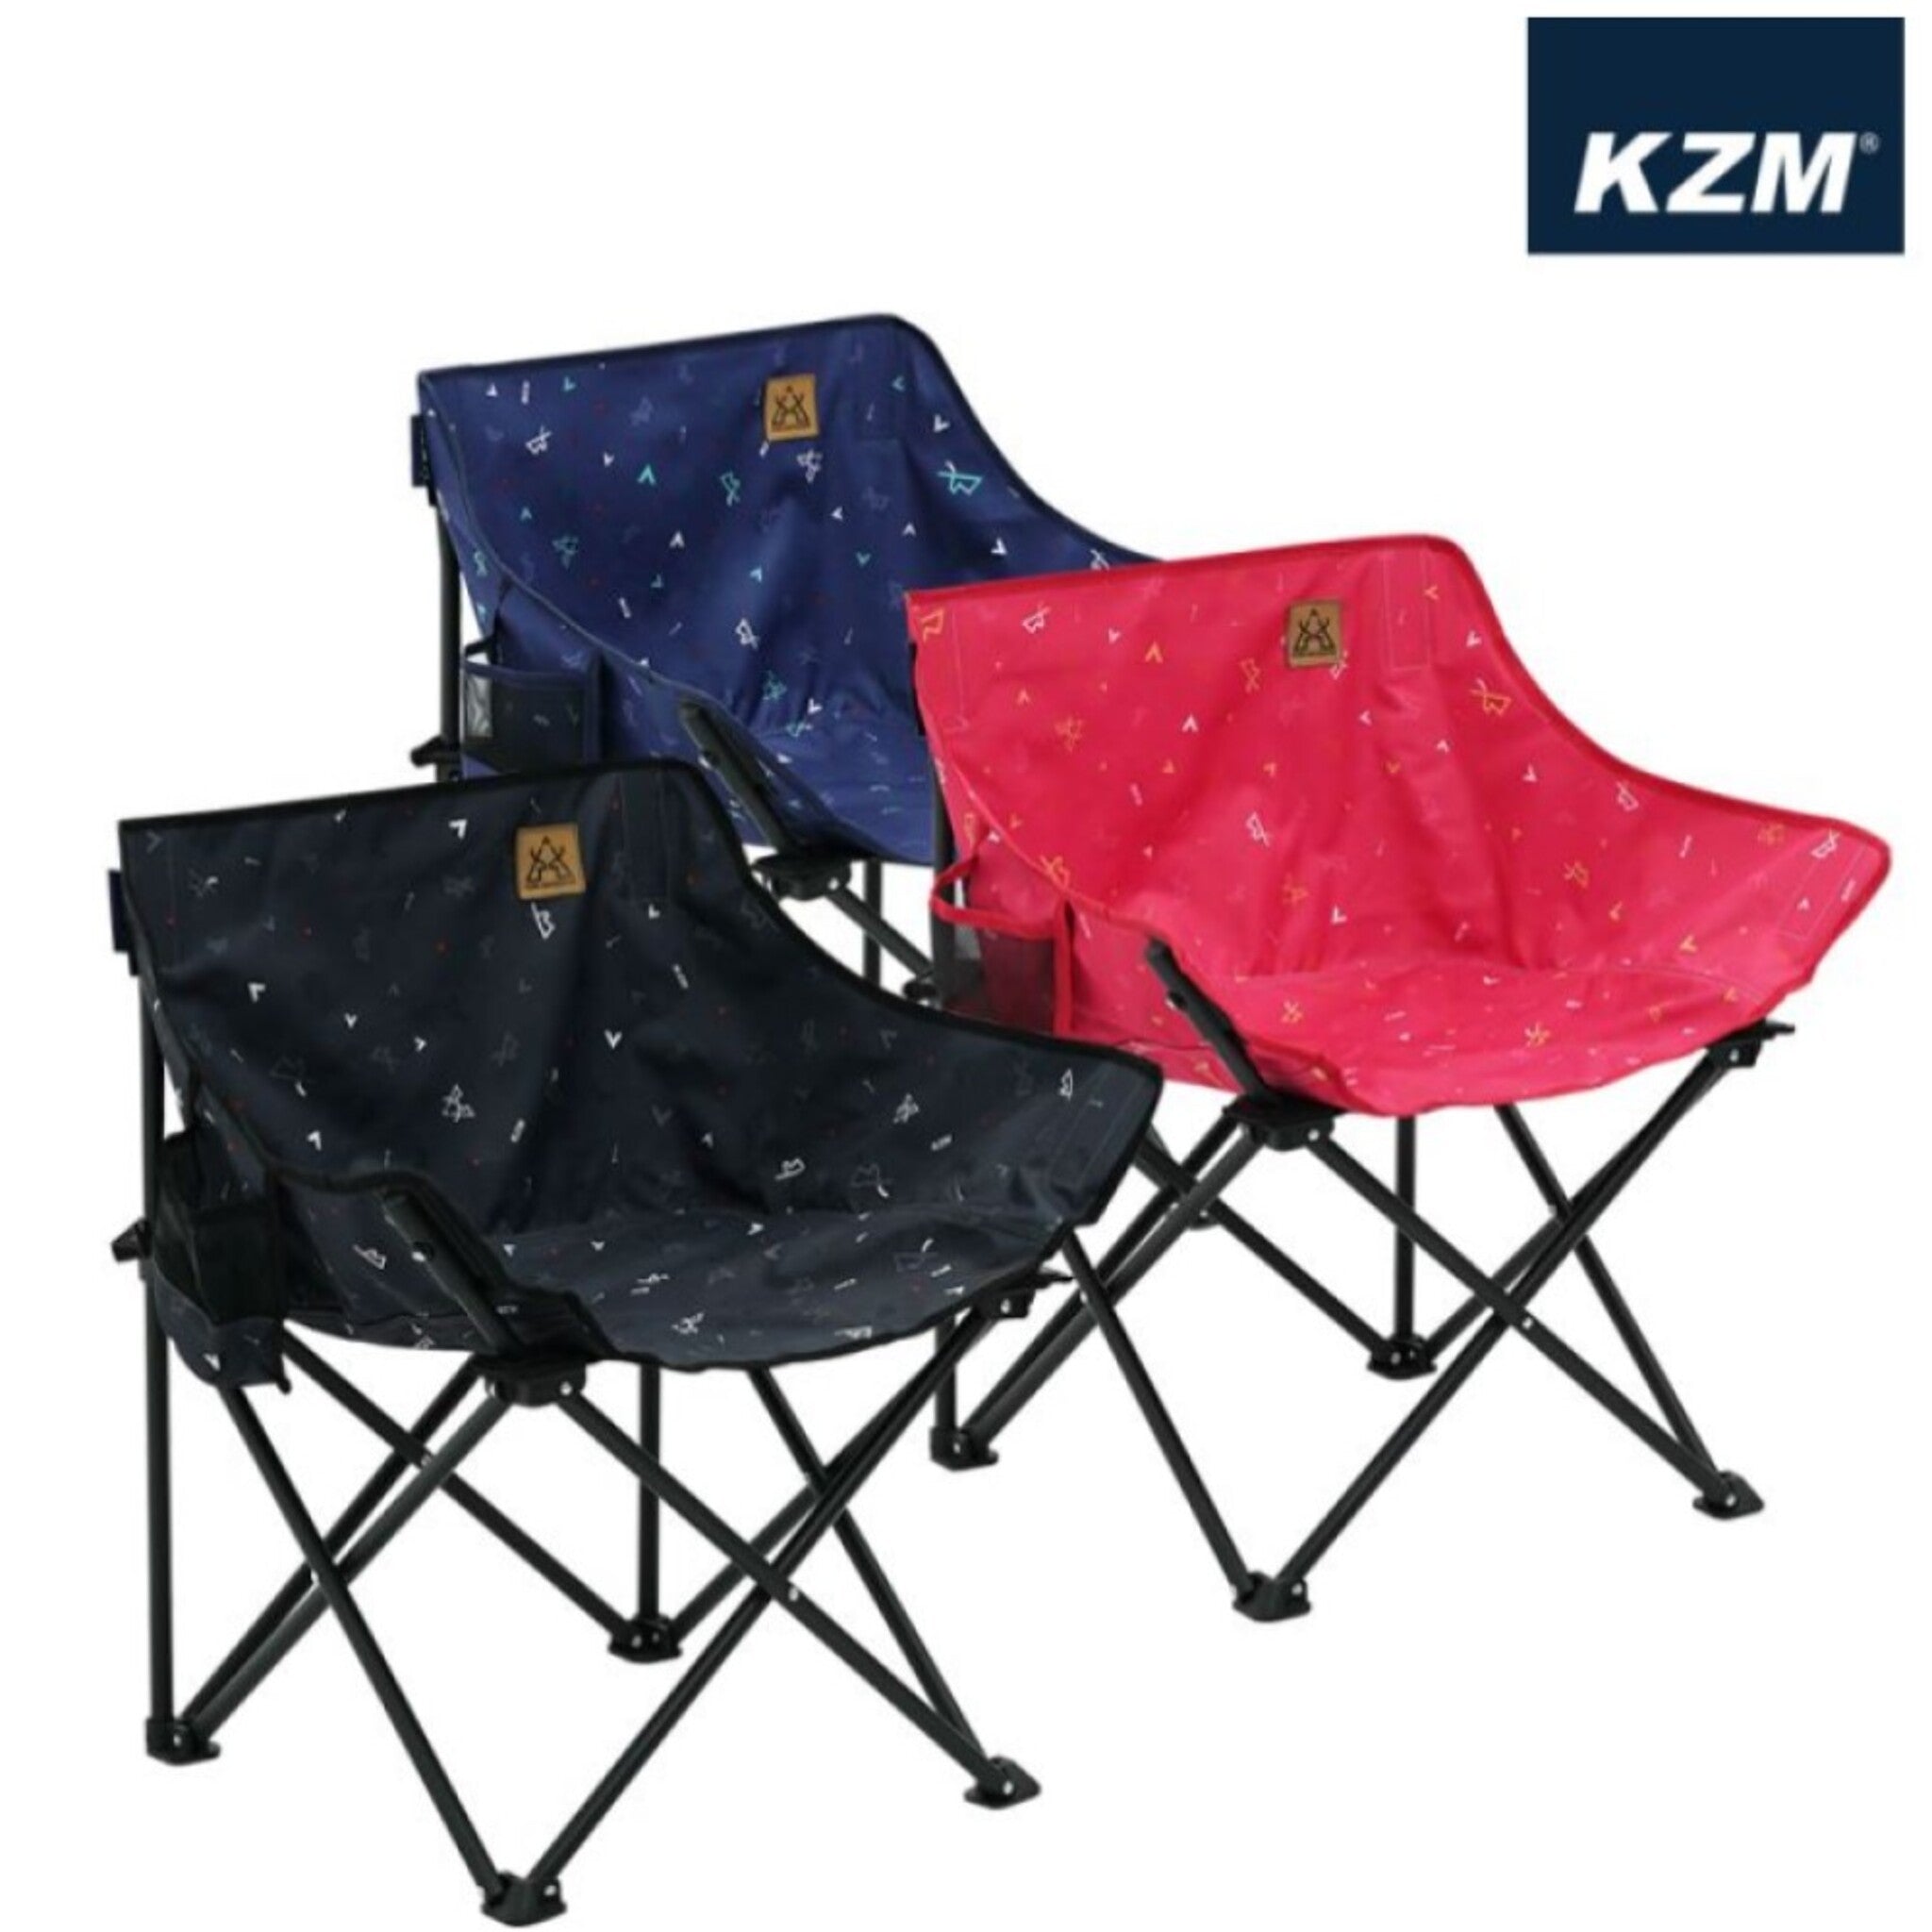 KAZMI KZM 印花休閒折疊椅 三色可選 K20T1C018